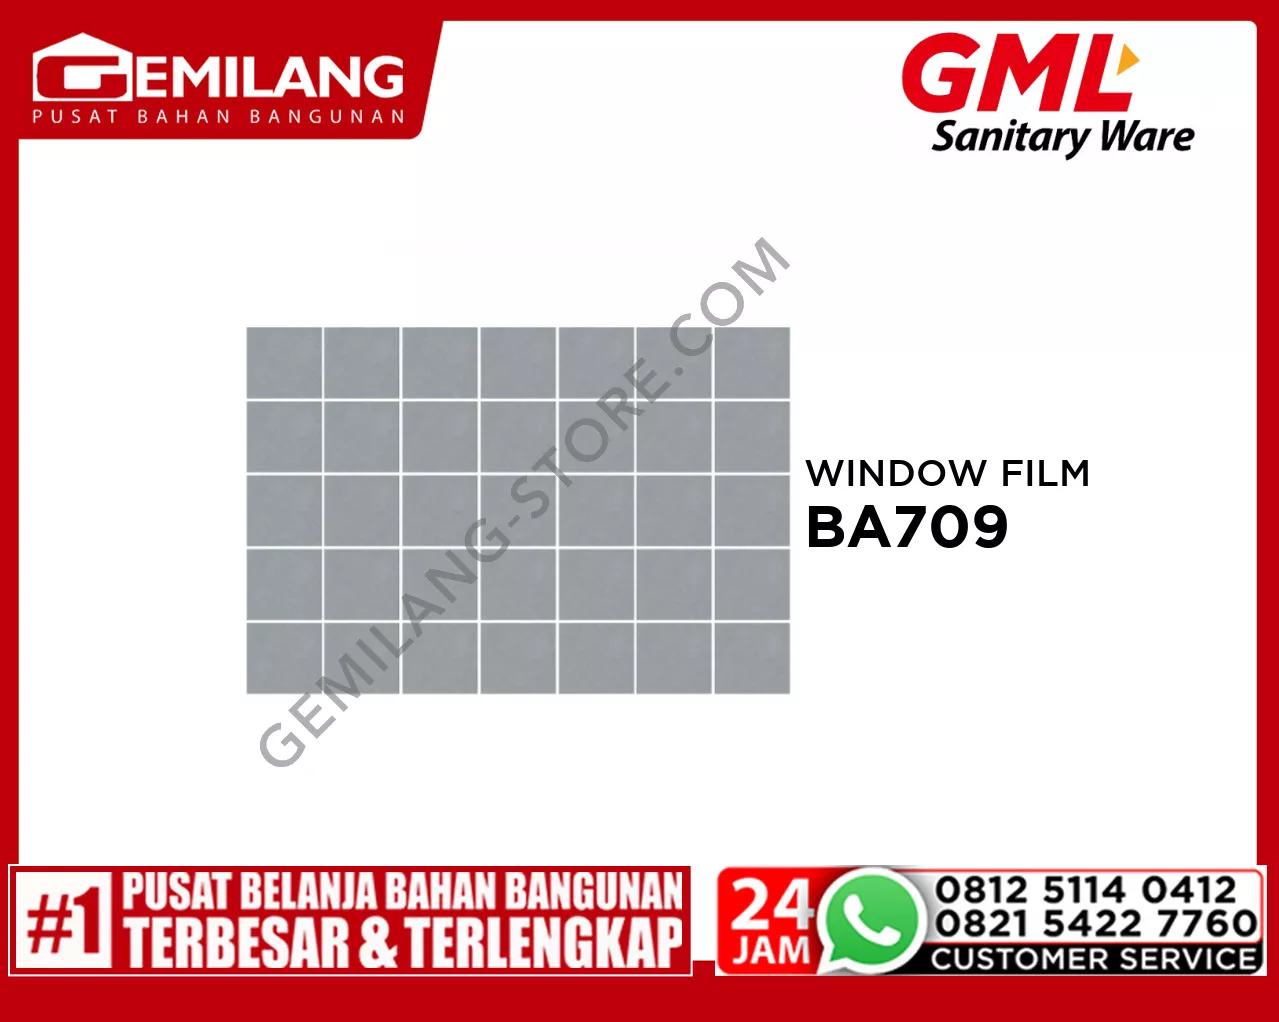 GML 2D STATIC WINDOW FILM BA709 50 x 90cm x 0.18mm